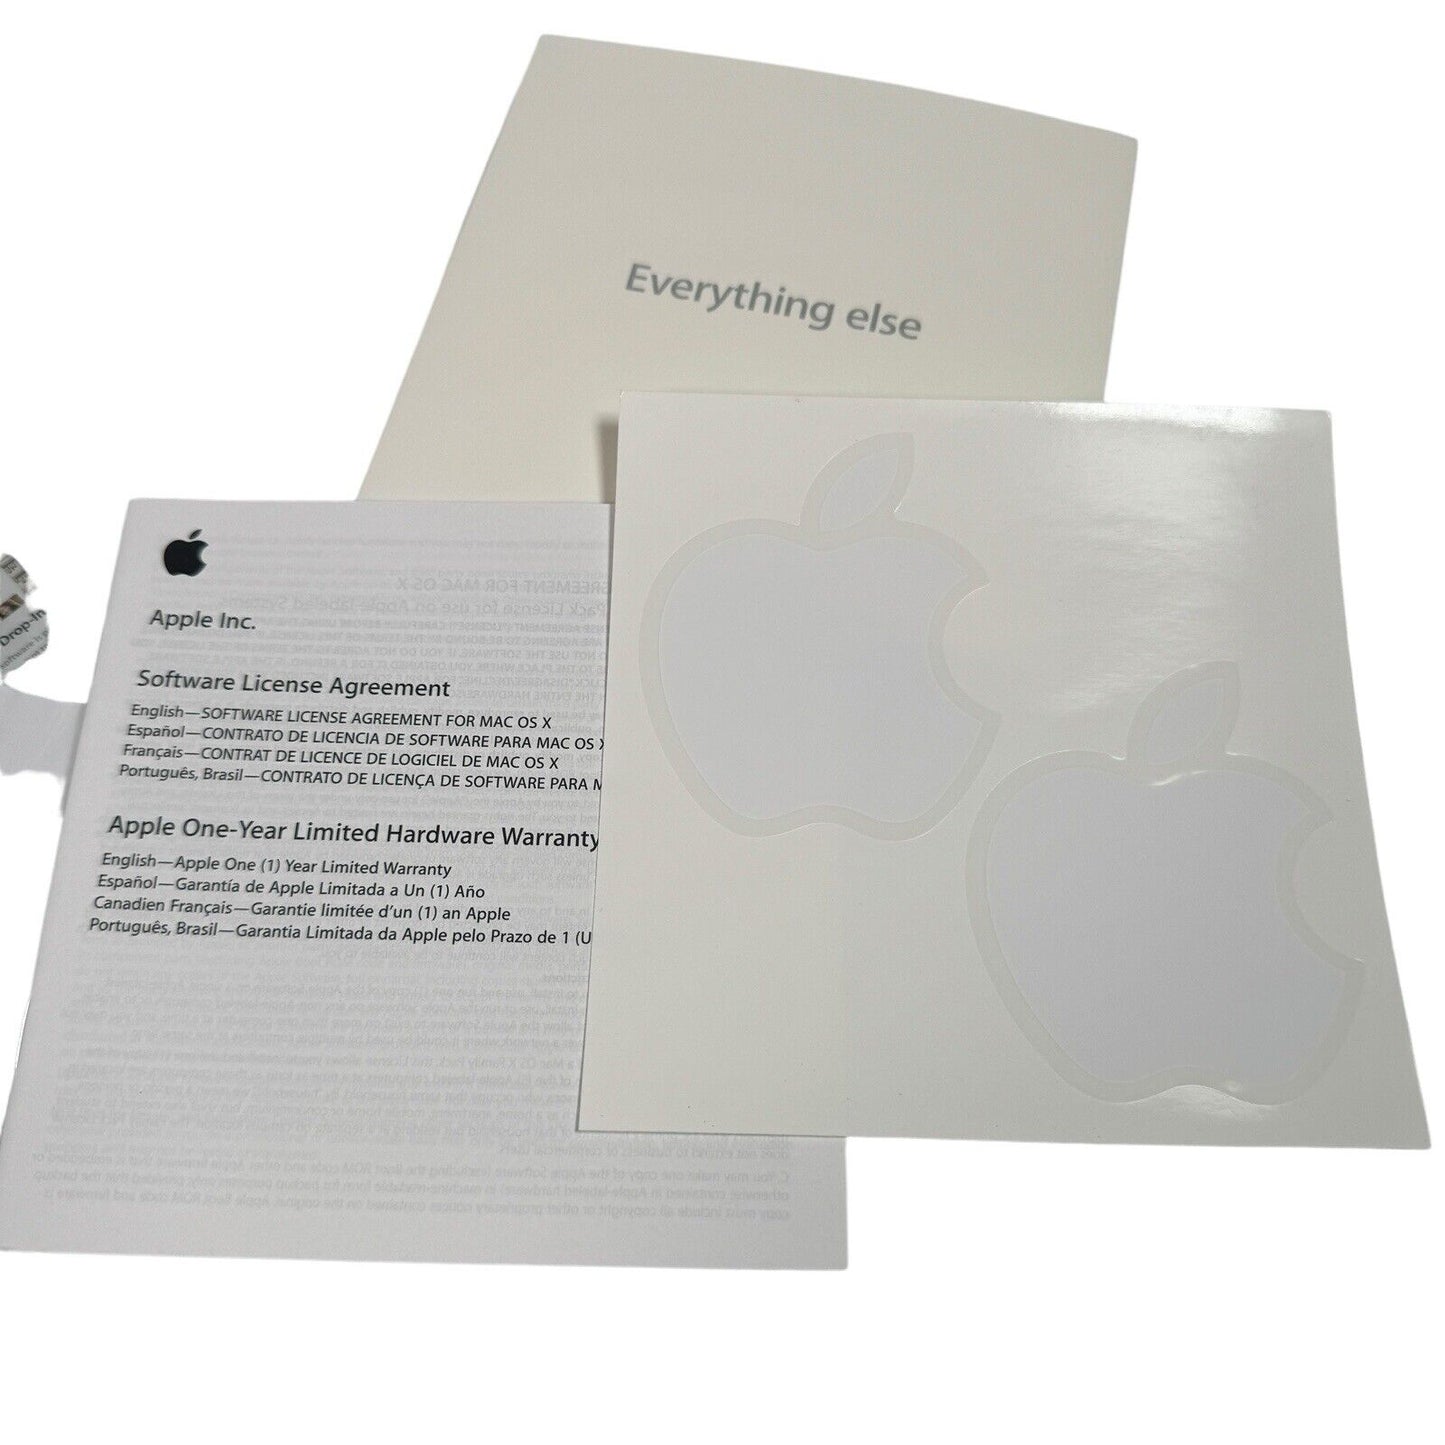 Legacy Apple 15-inch MacBook Pro Mac OS X 10.5.6 Install / Applications DVD Set